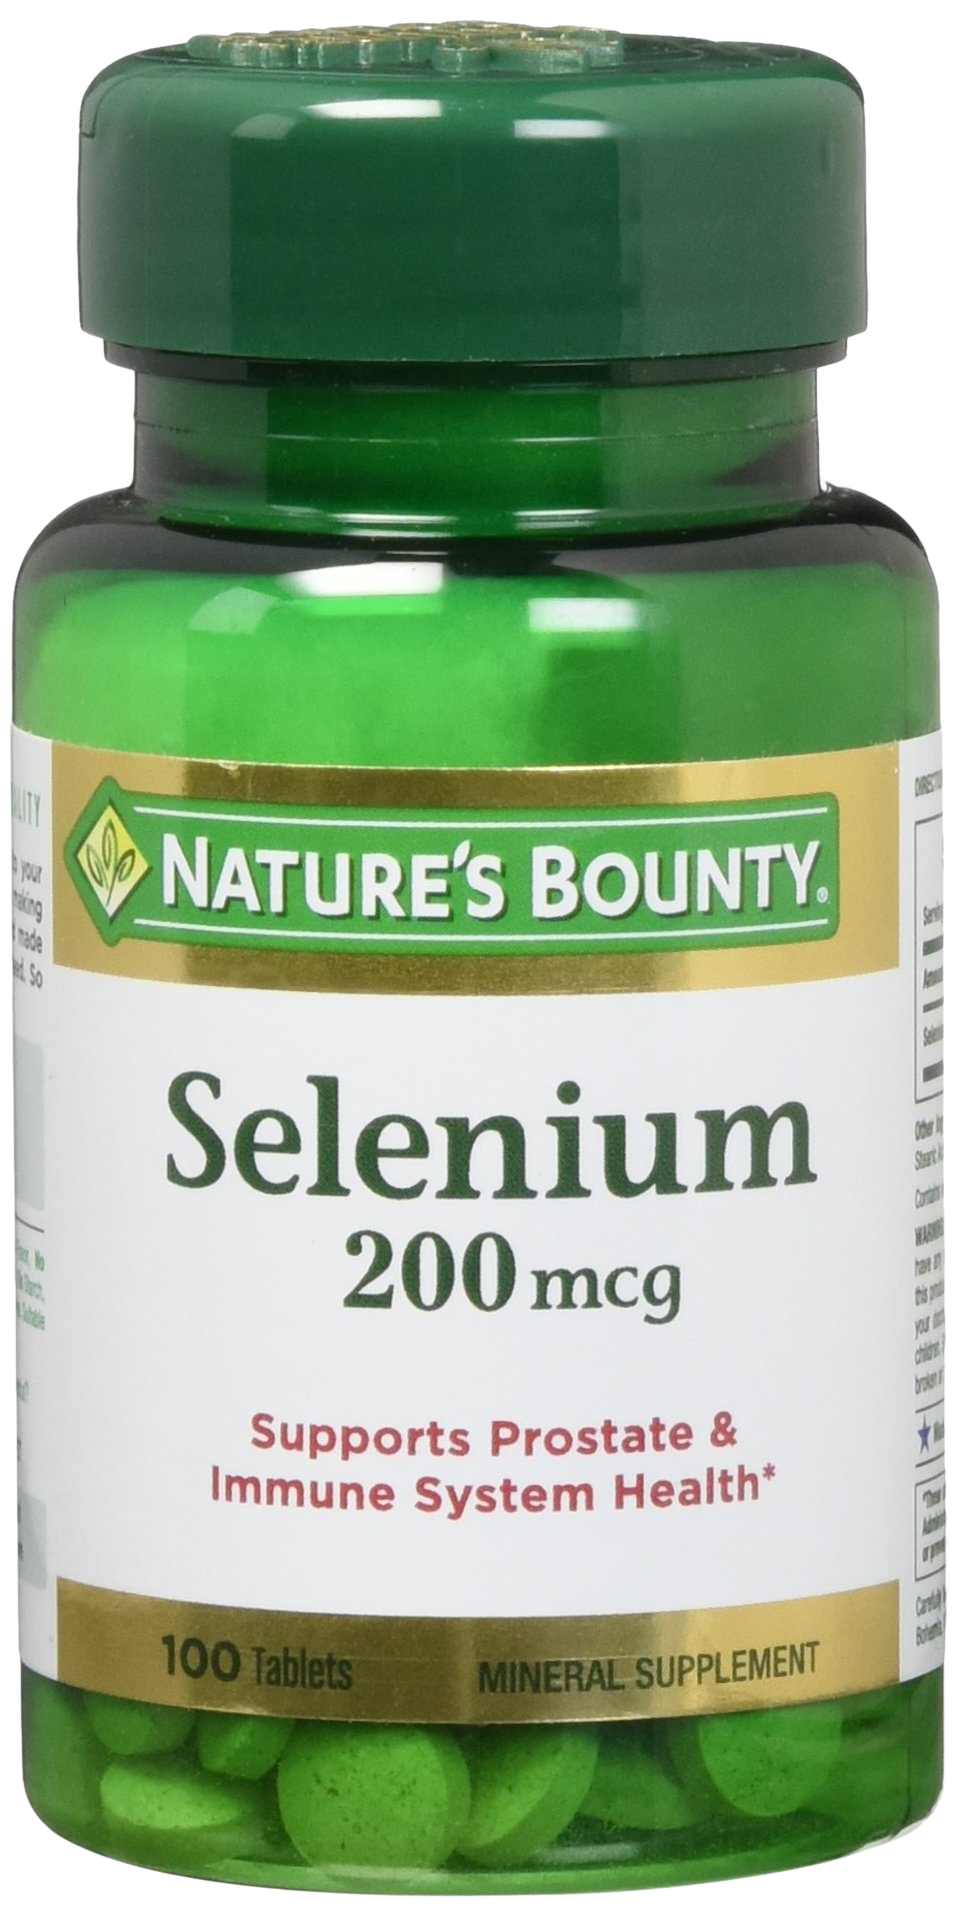 Nature's Bounty Selenium Supplement